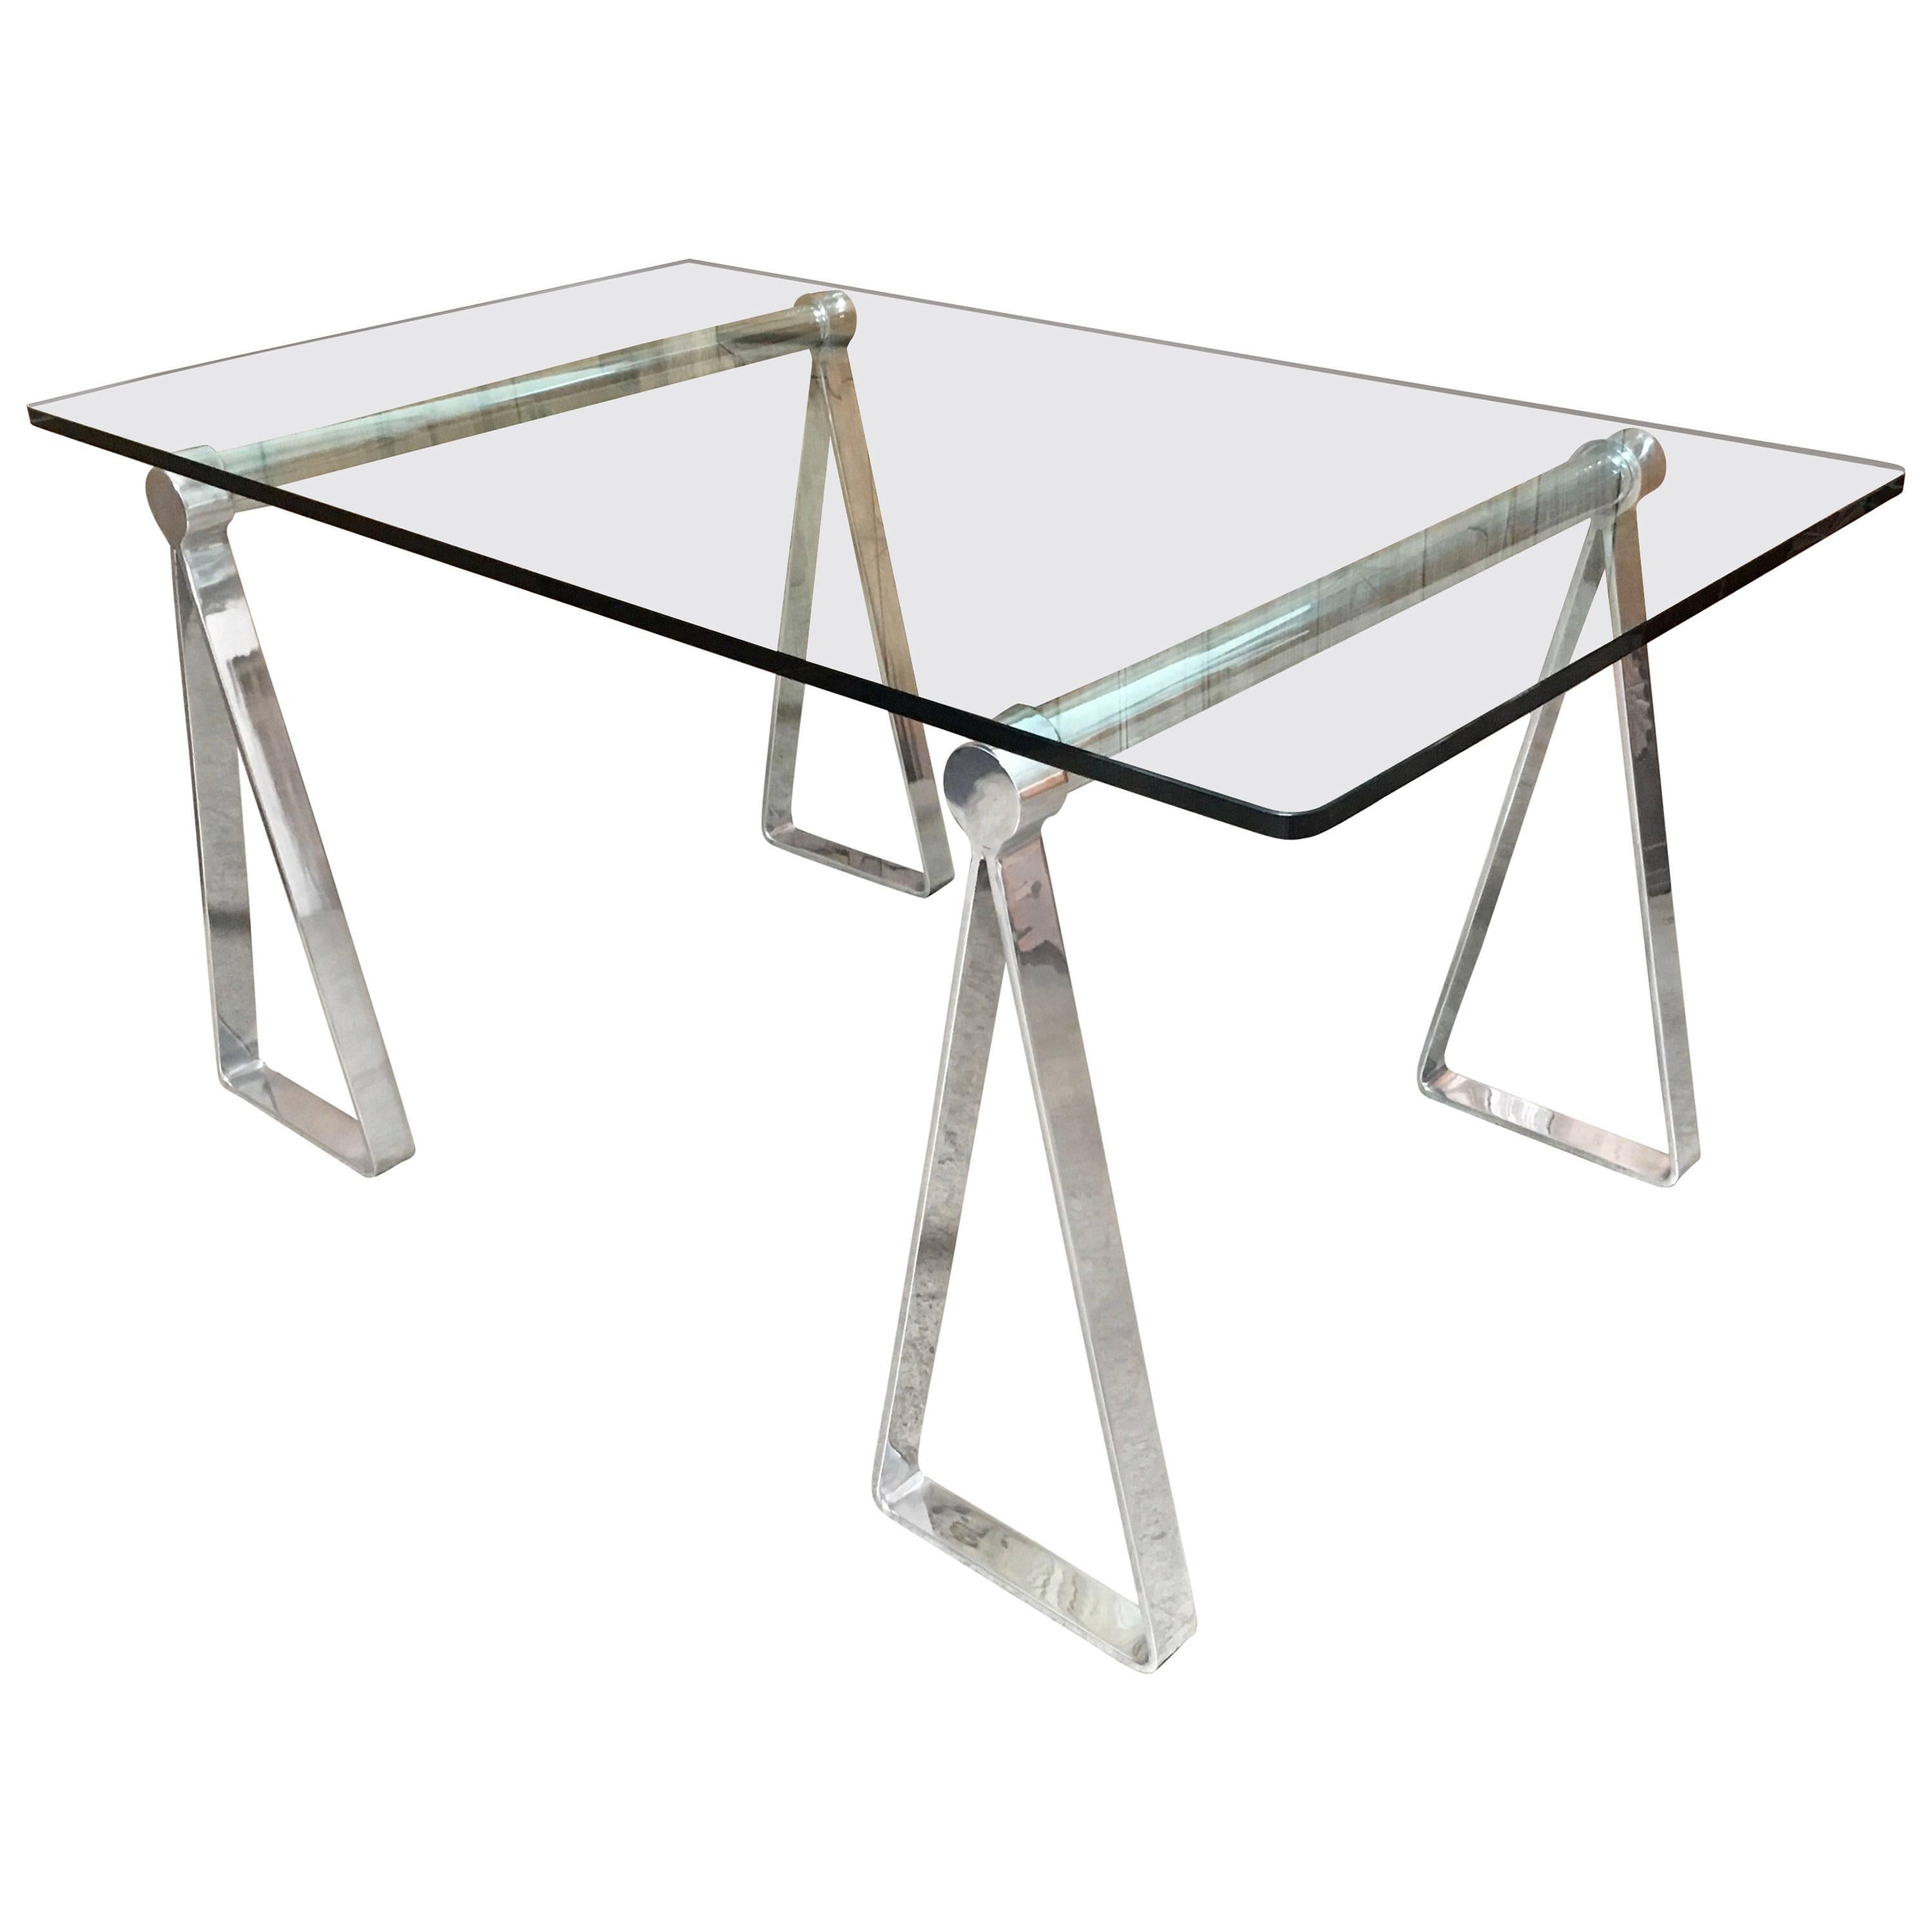 Mirrored Polished Aluminum Sawhorse Table Desk